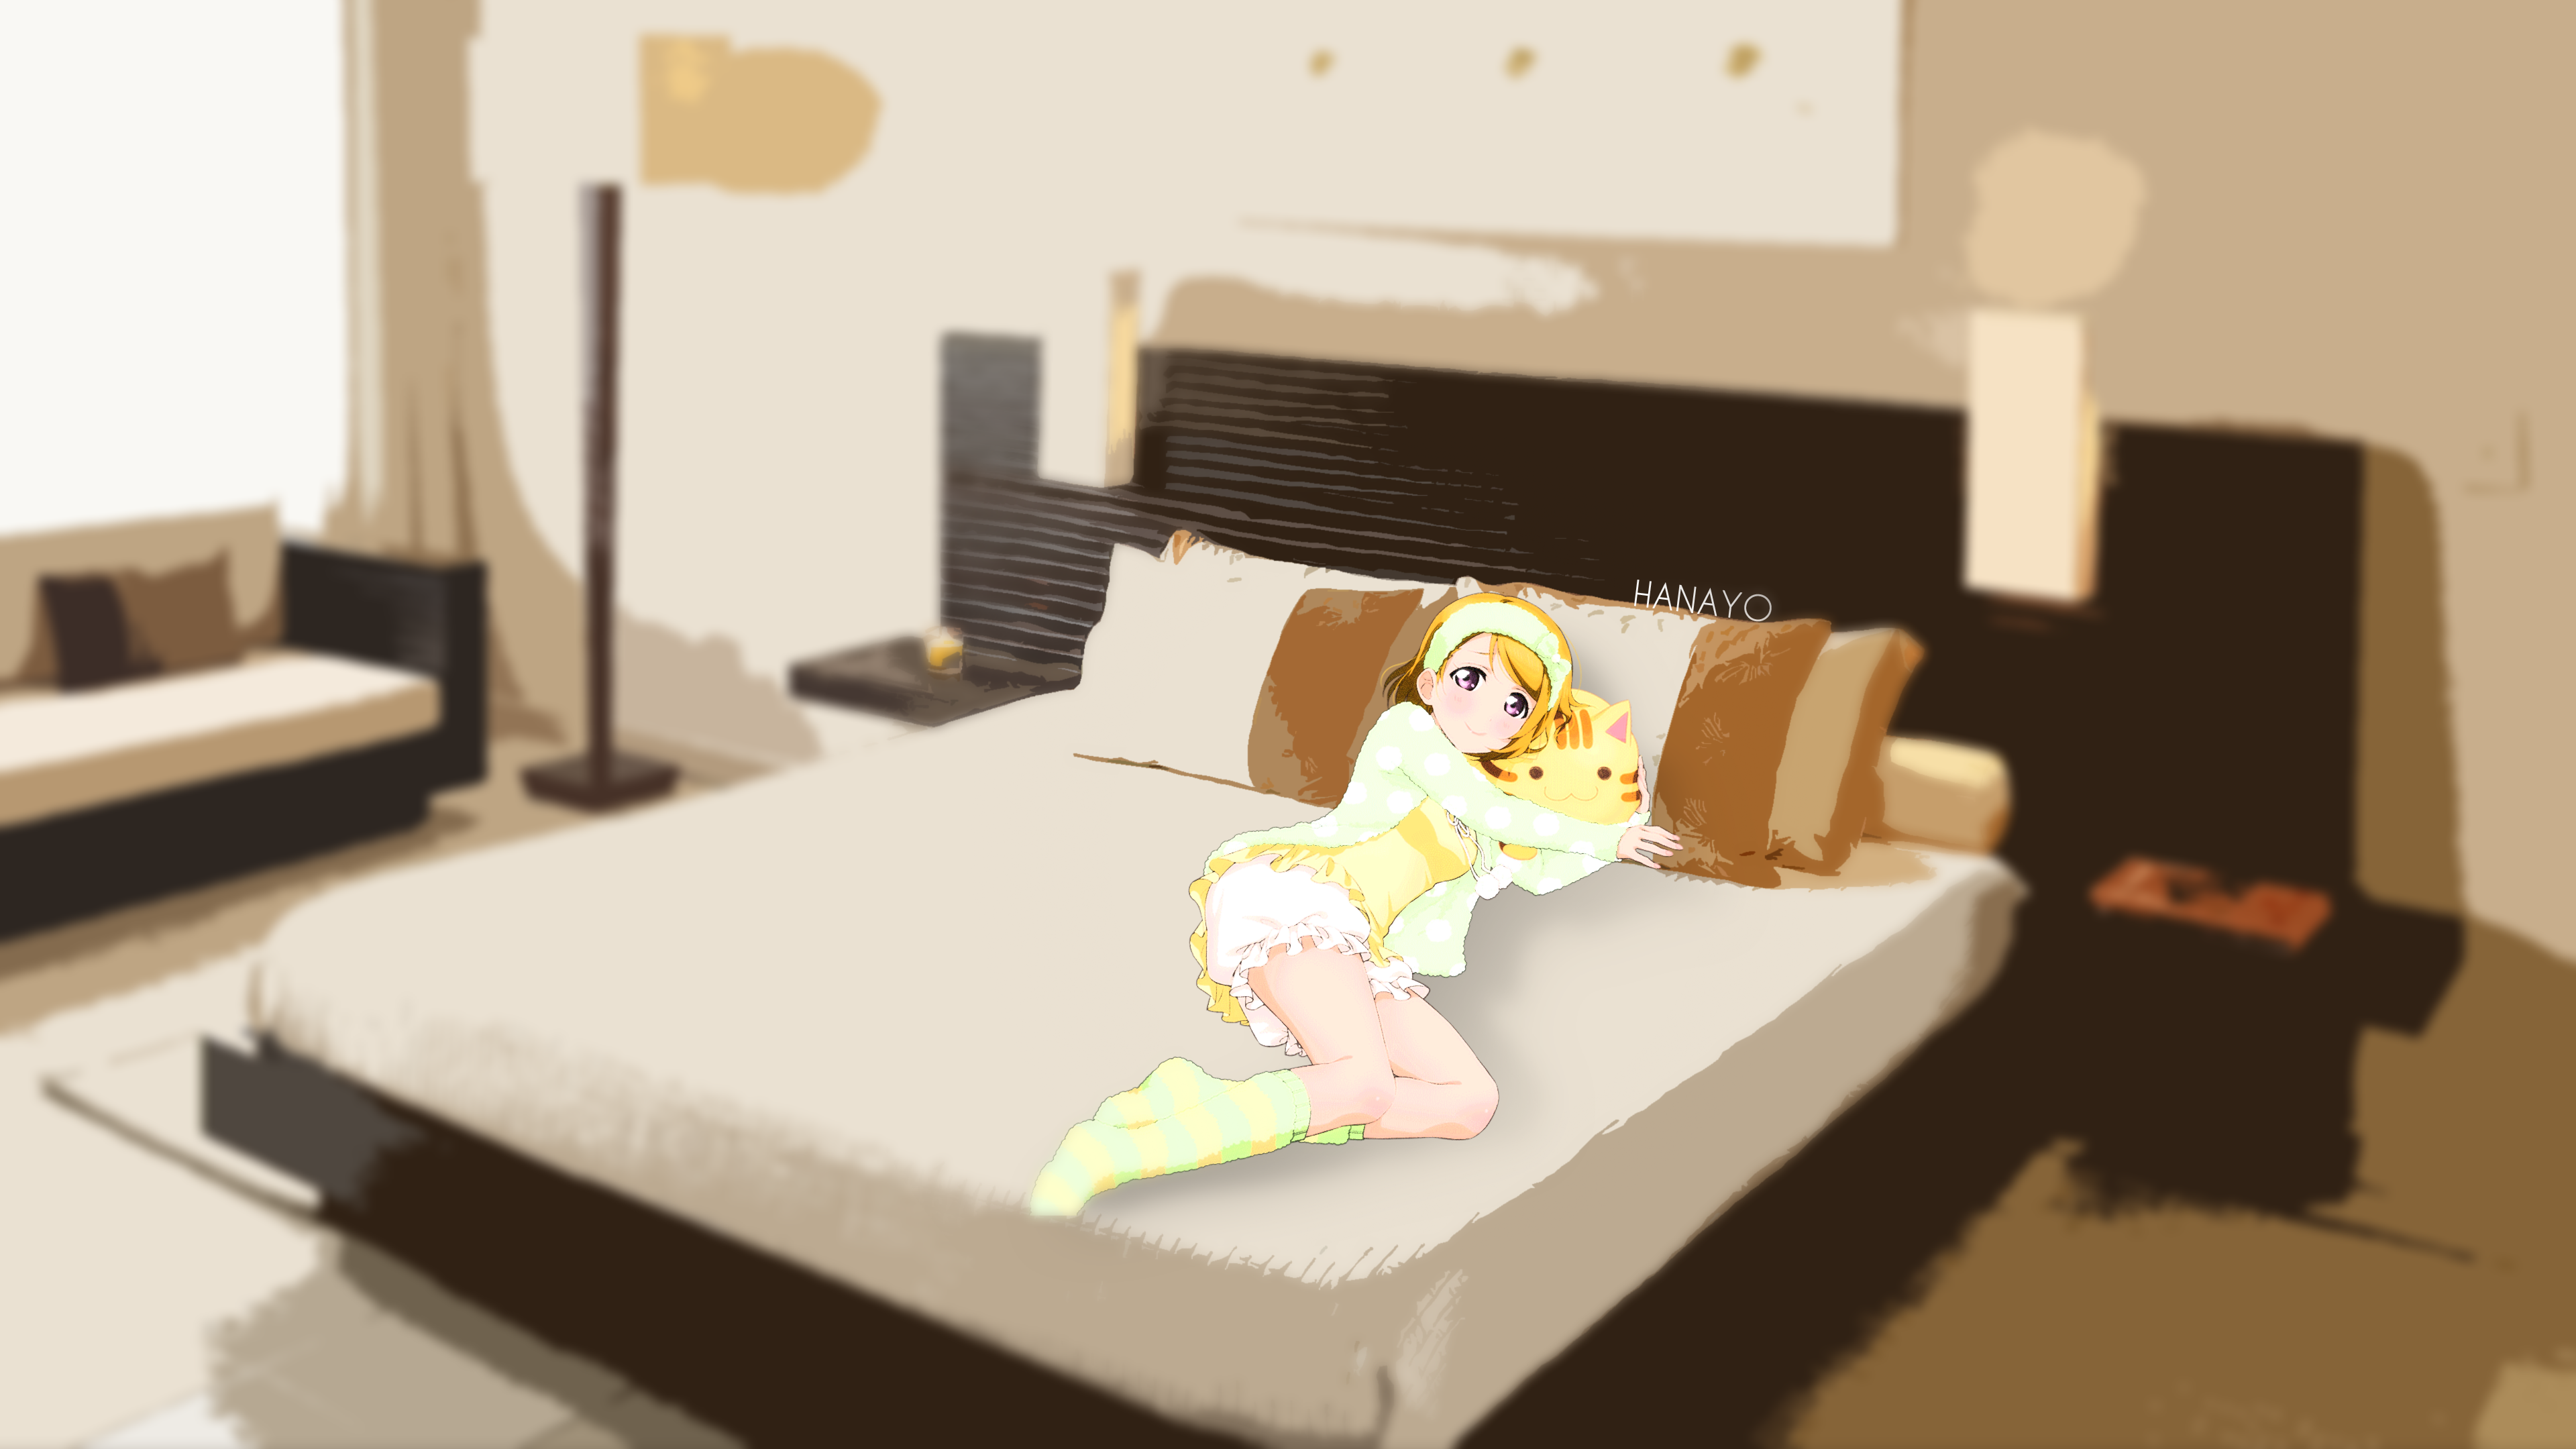 Anime 3840x2160 Koizumi Hanayo blurred bed anime girls anime lying down in bed blonde